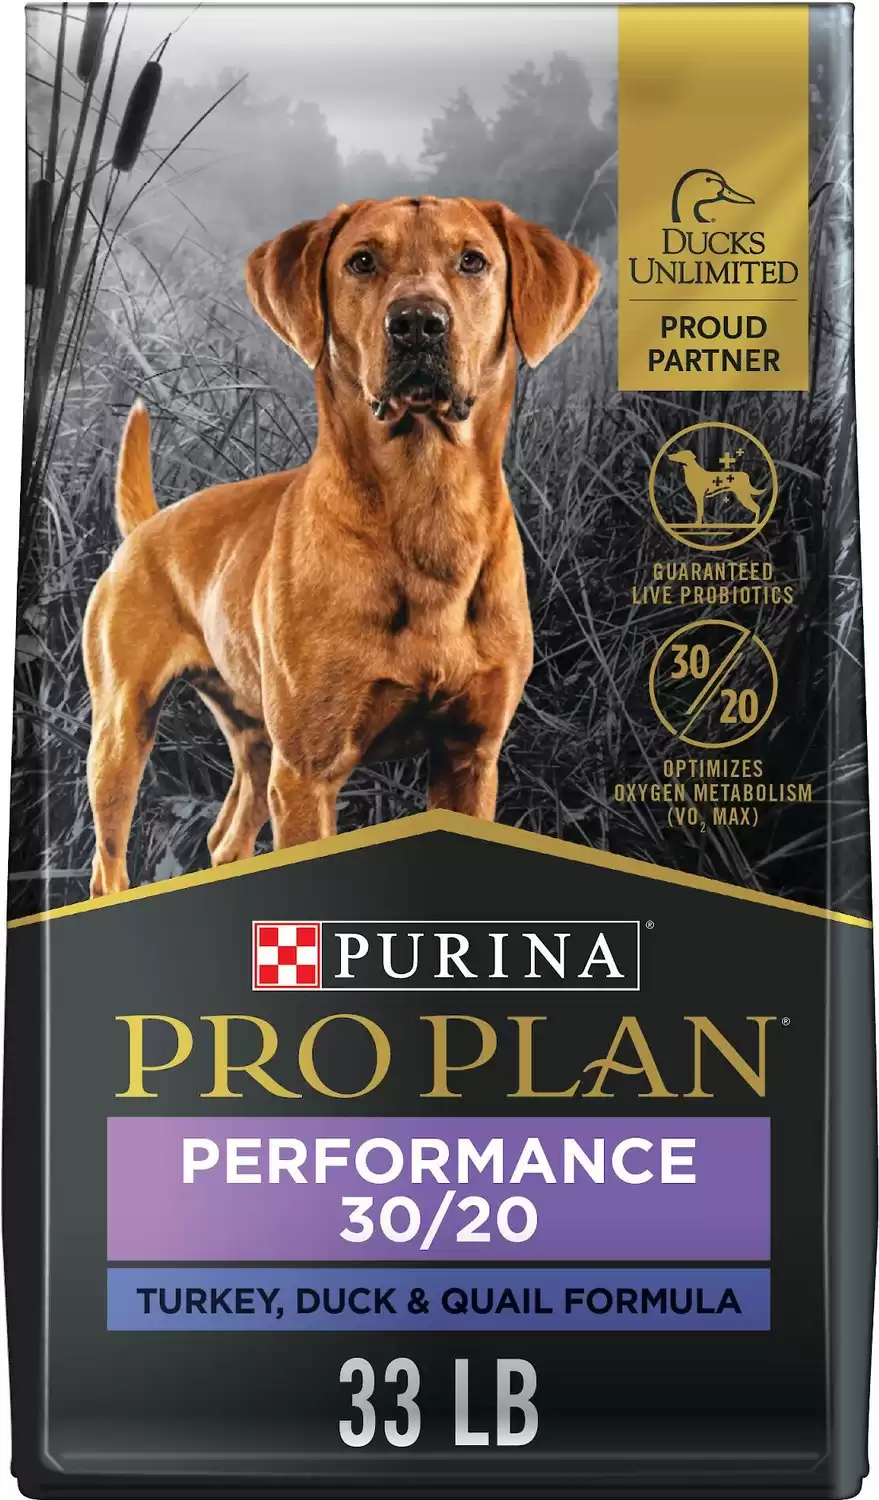 Purina Pro Plan Performance 30/20 Turkey, Duck & Quail Formula Dry Dog Food